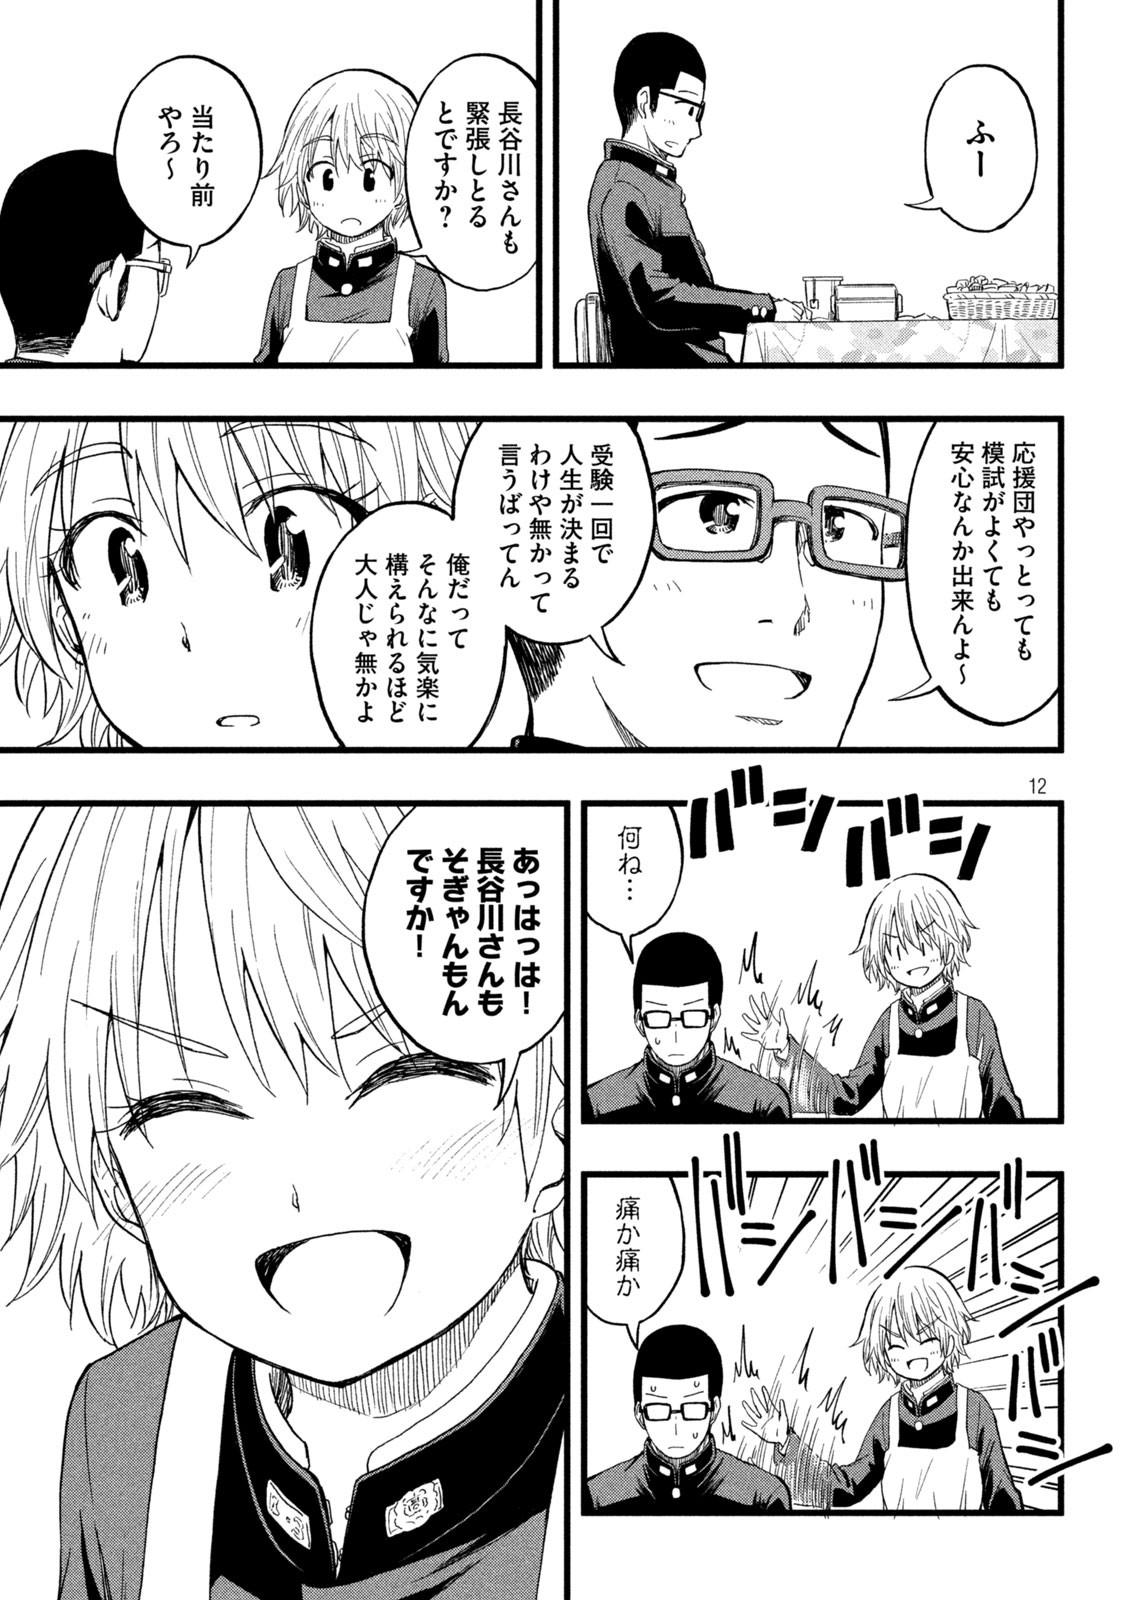 Koharu haru! - Chapter 84 - Page 3